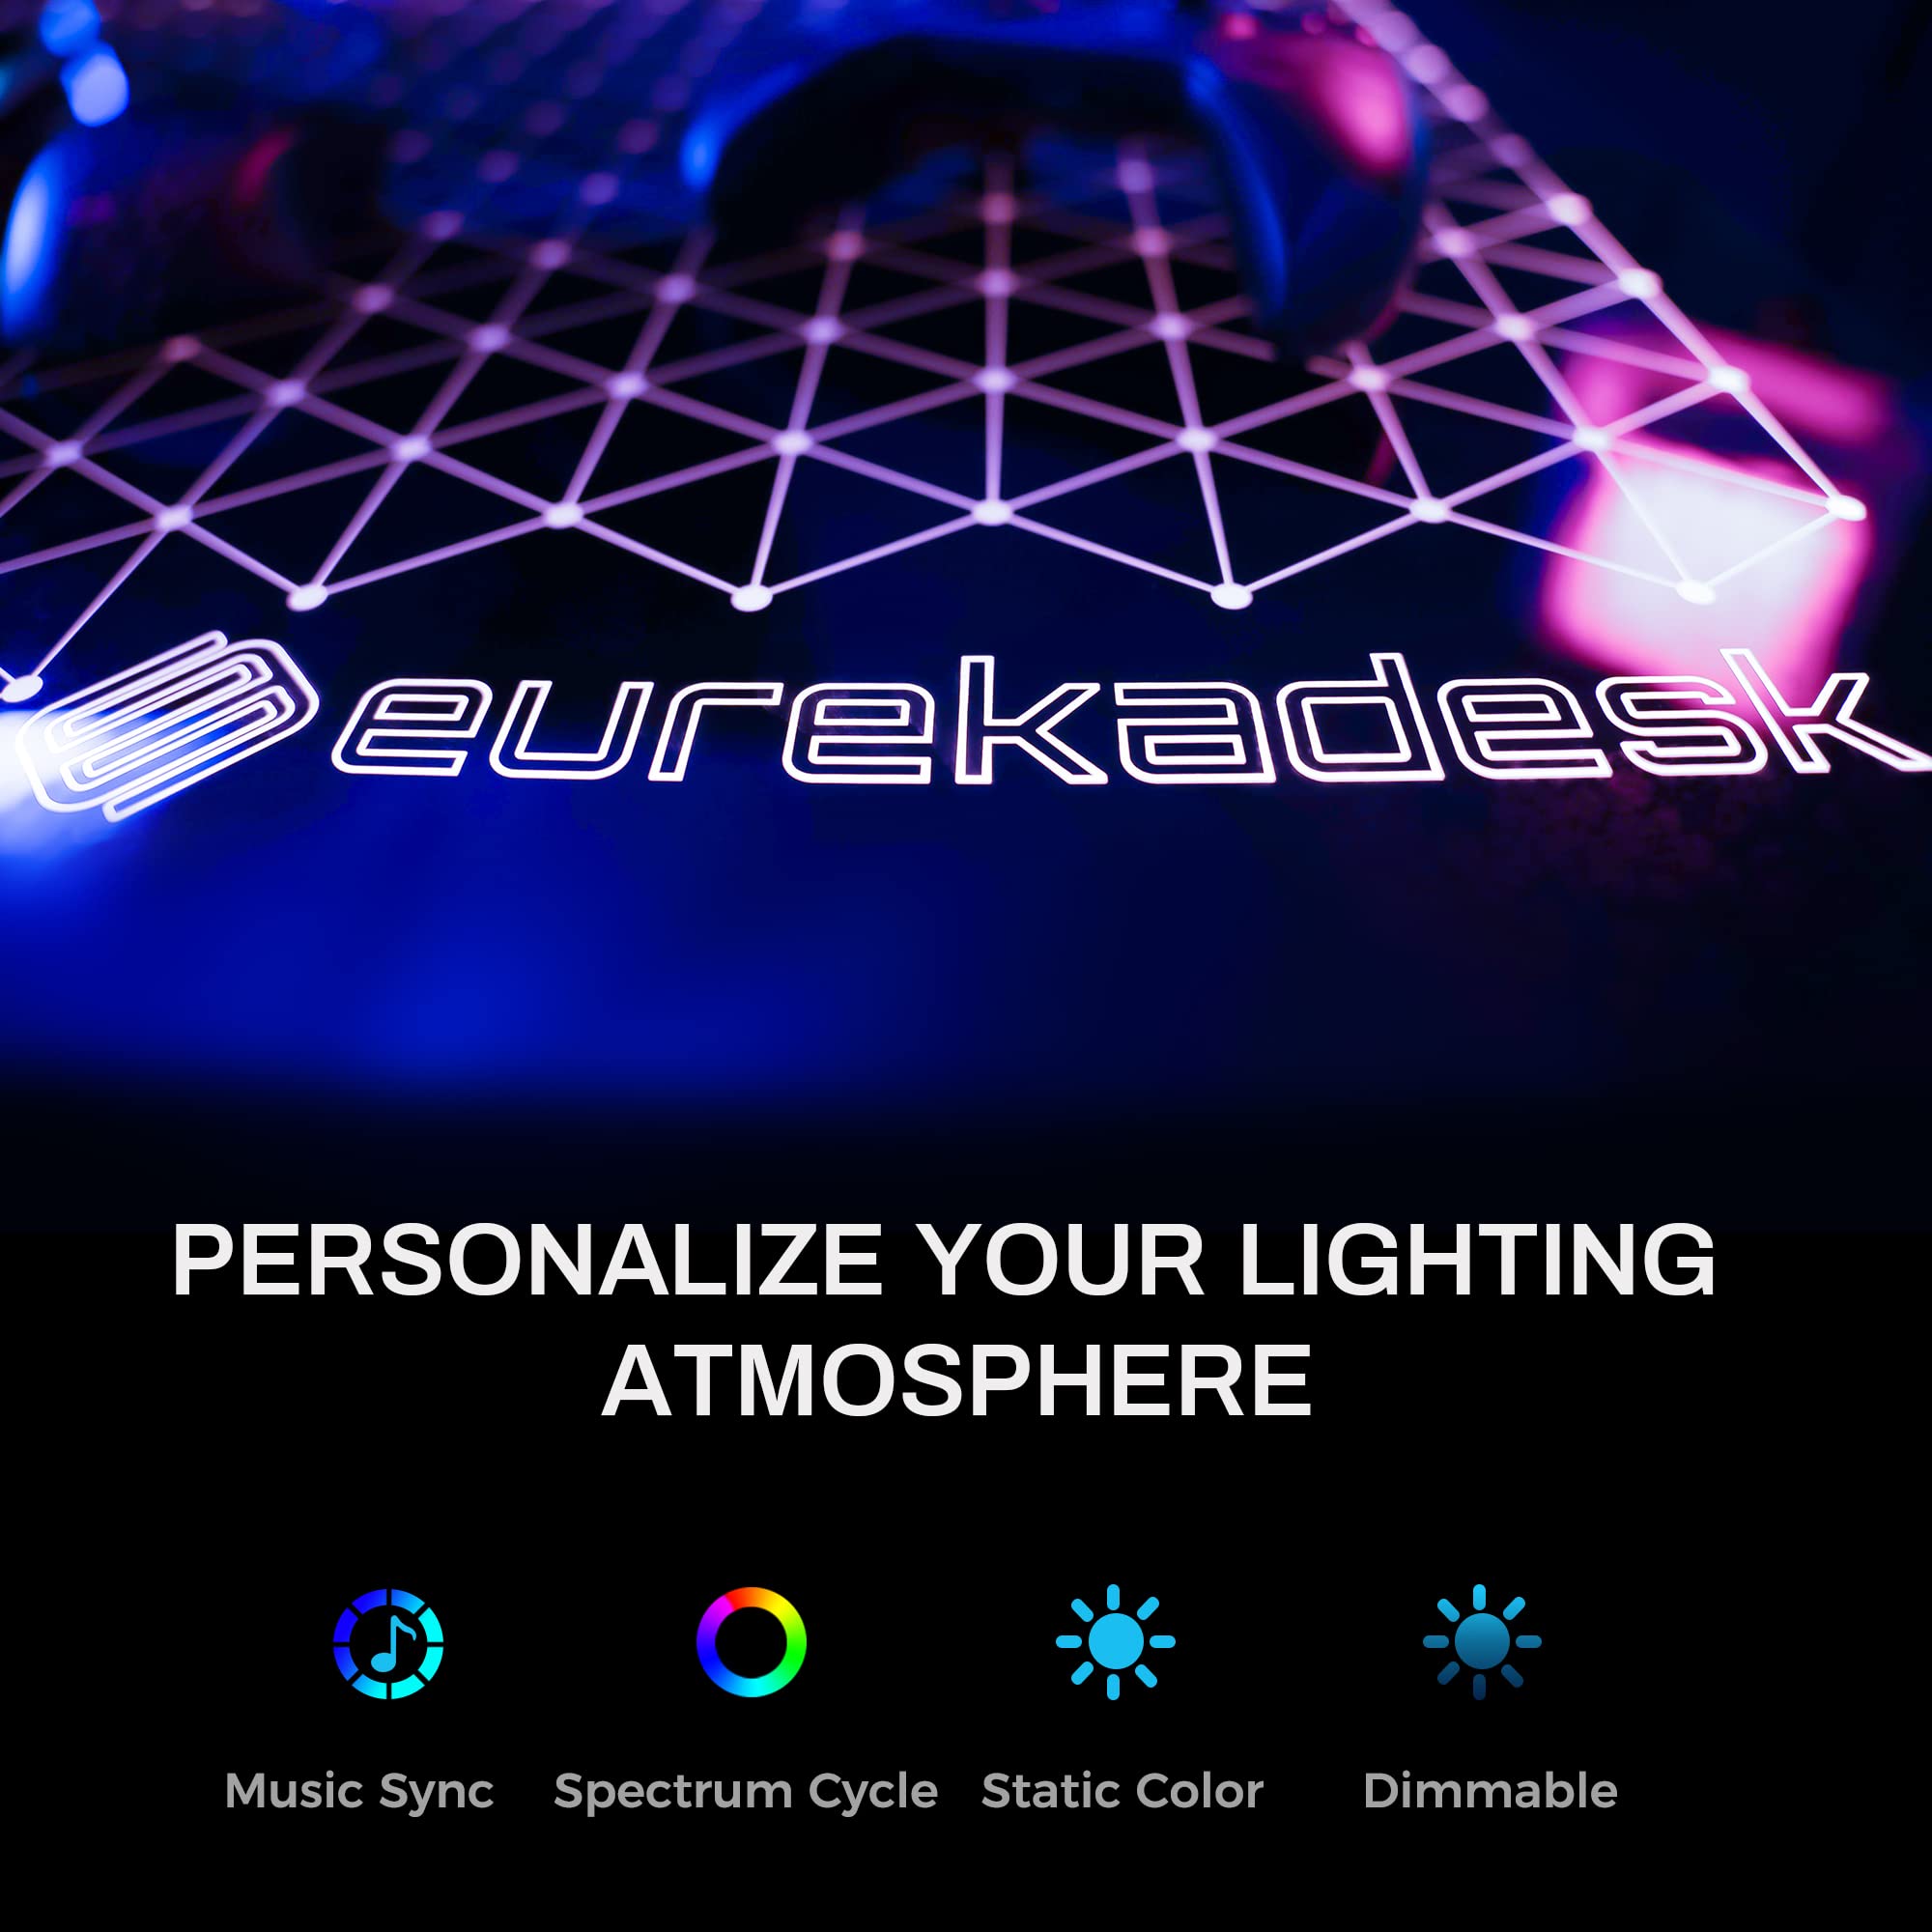 Eureka Gaming L60 RGB Spectrum Glass Computer Desk - Right